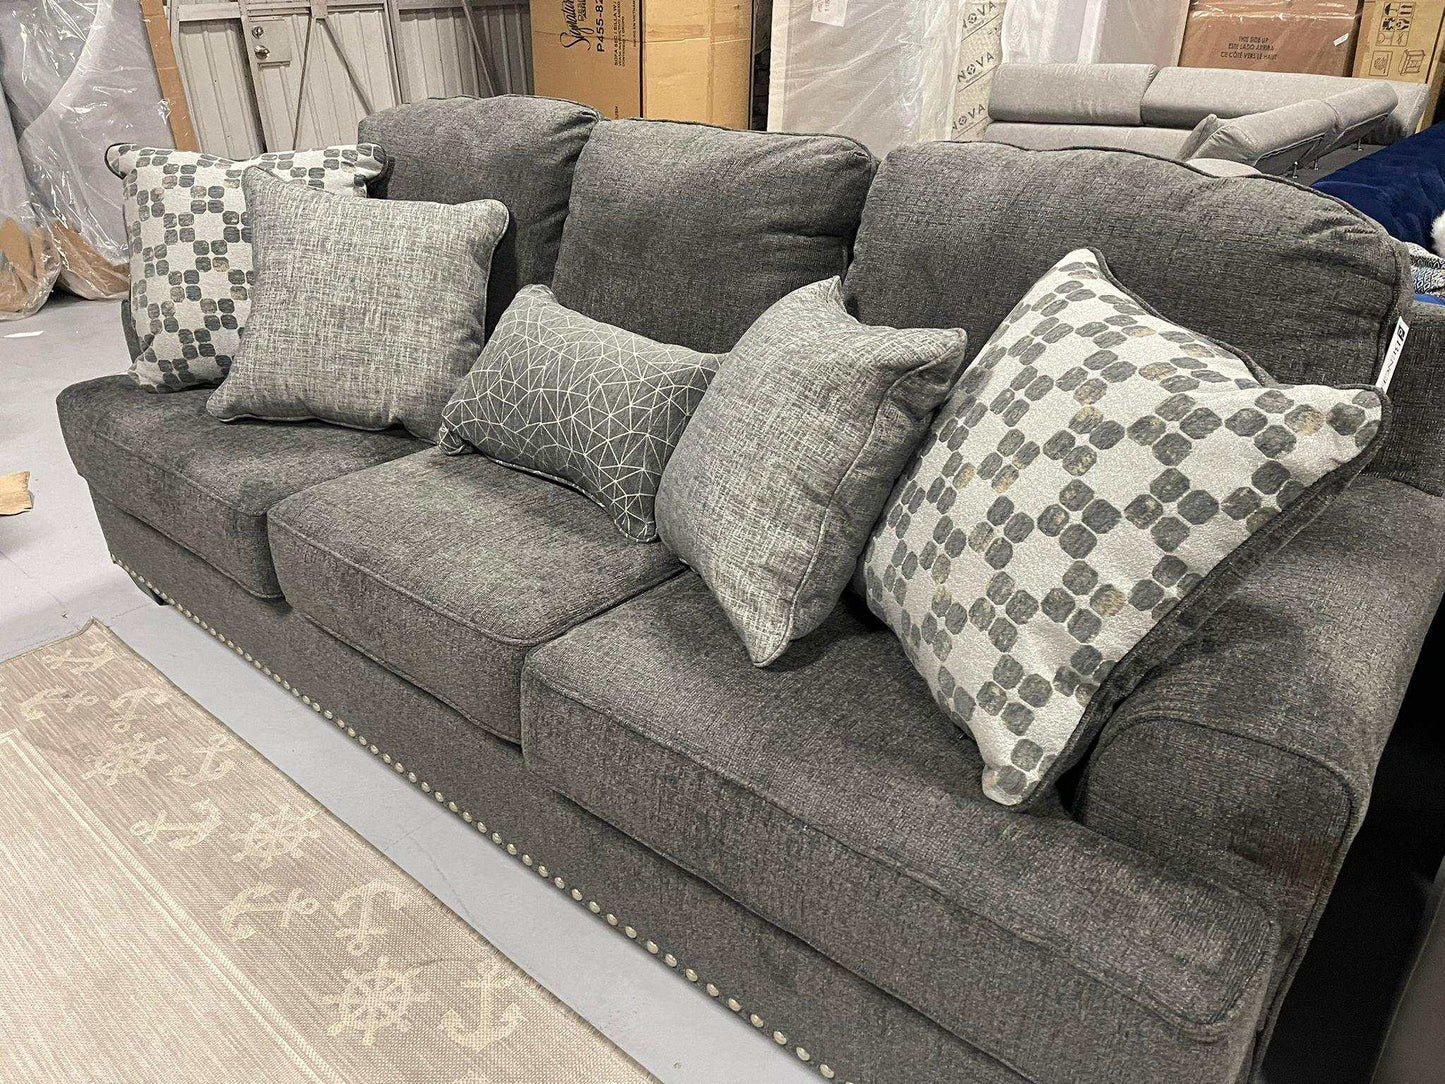 Locklin Carbon Gray Sofa